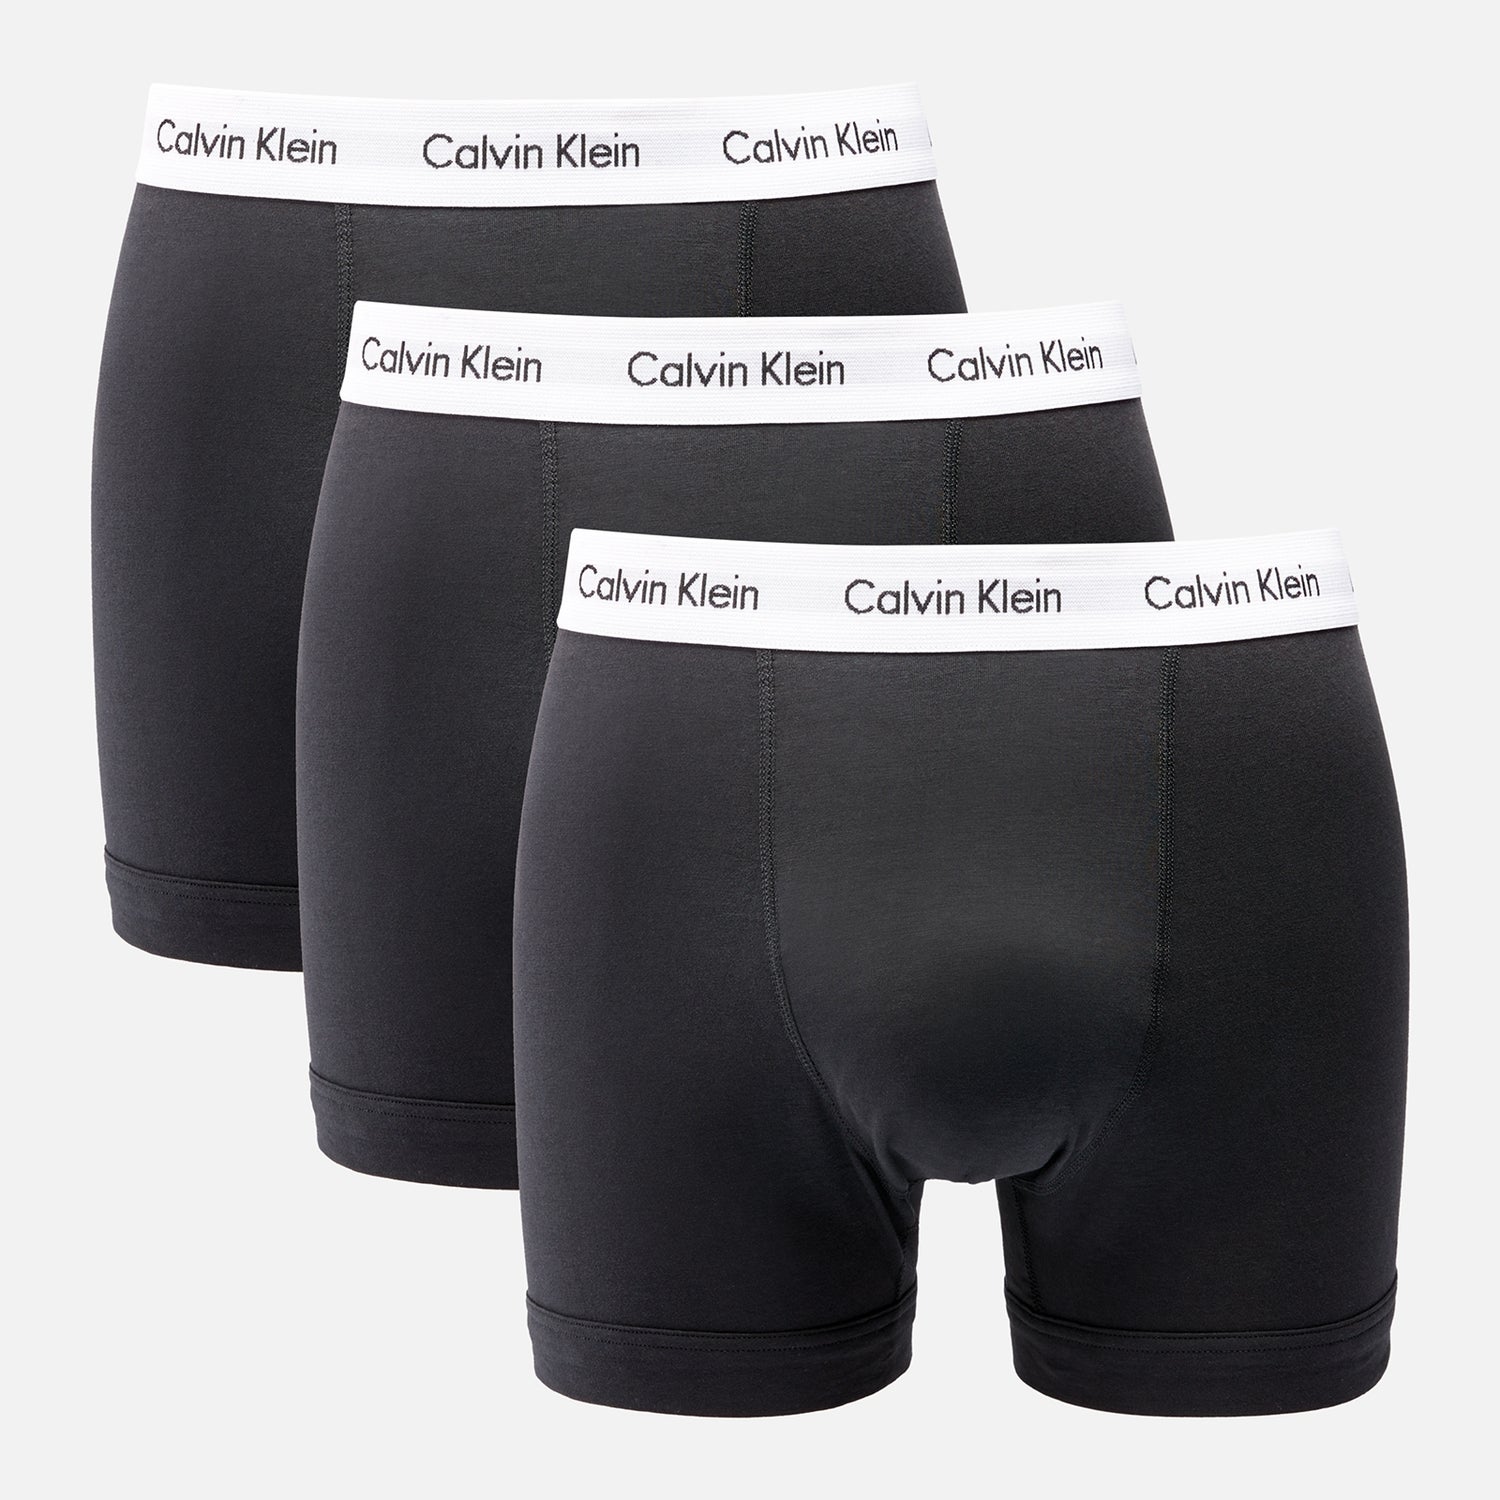 Calvin Klein Men's Cotton Stretch 3-Pack Trunks - Black | TheHut.com